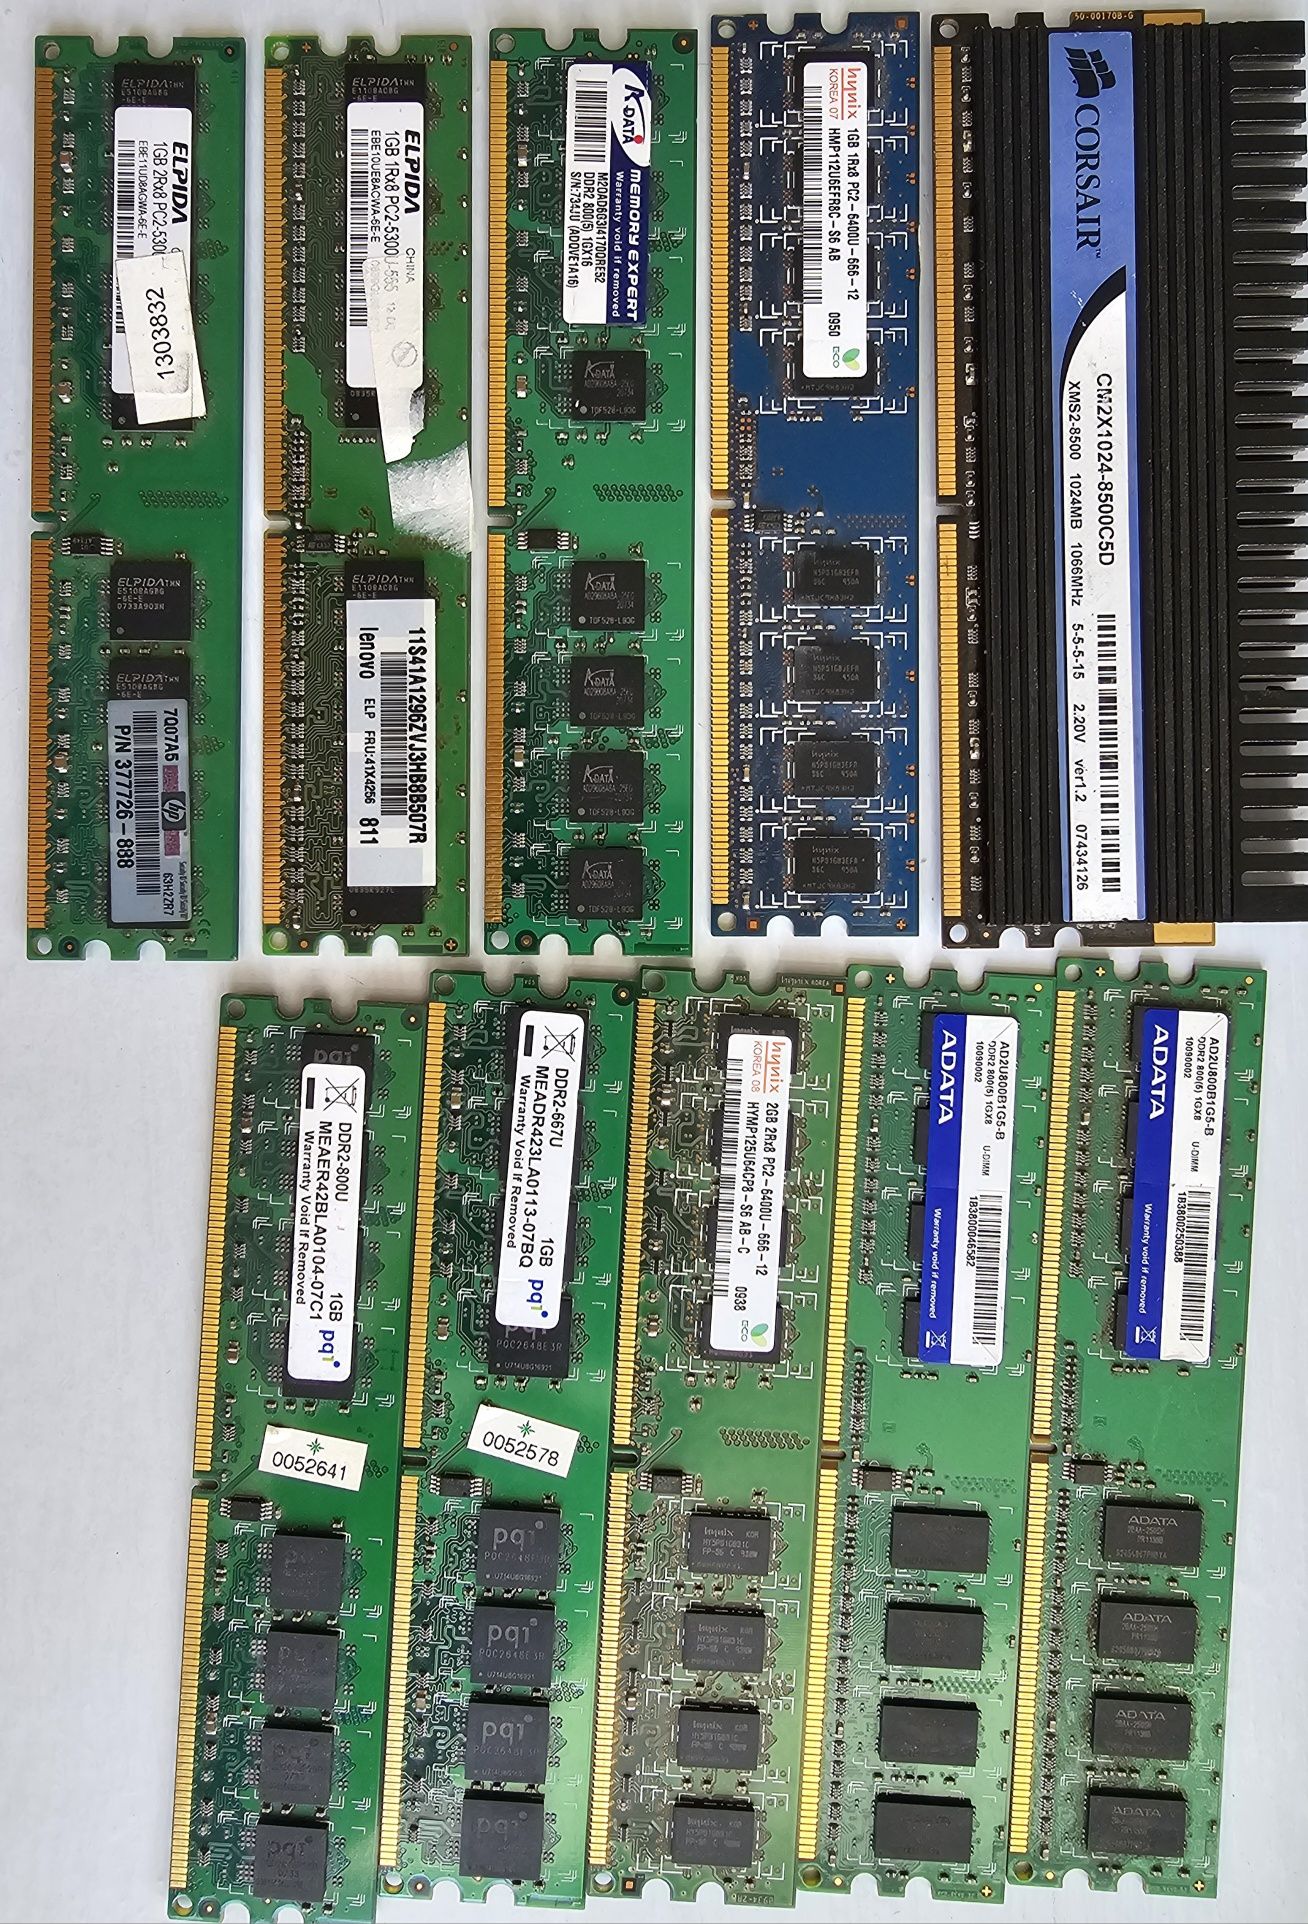 DDR2 РАМ памети различни честоти RAM